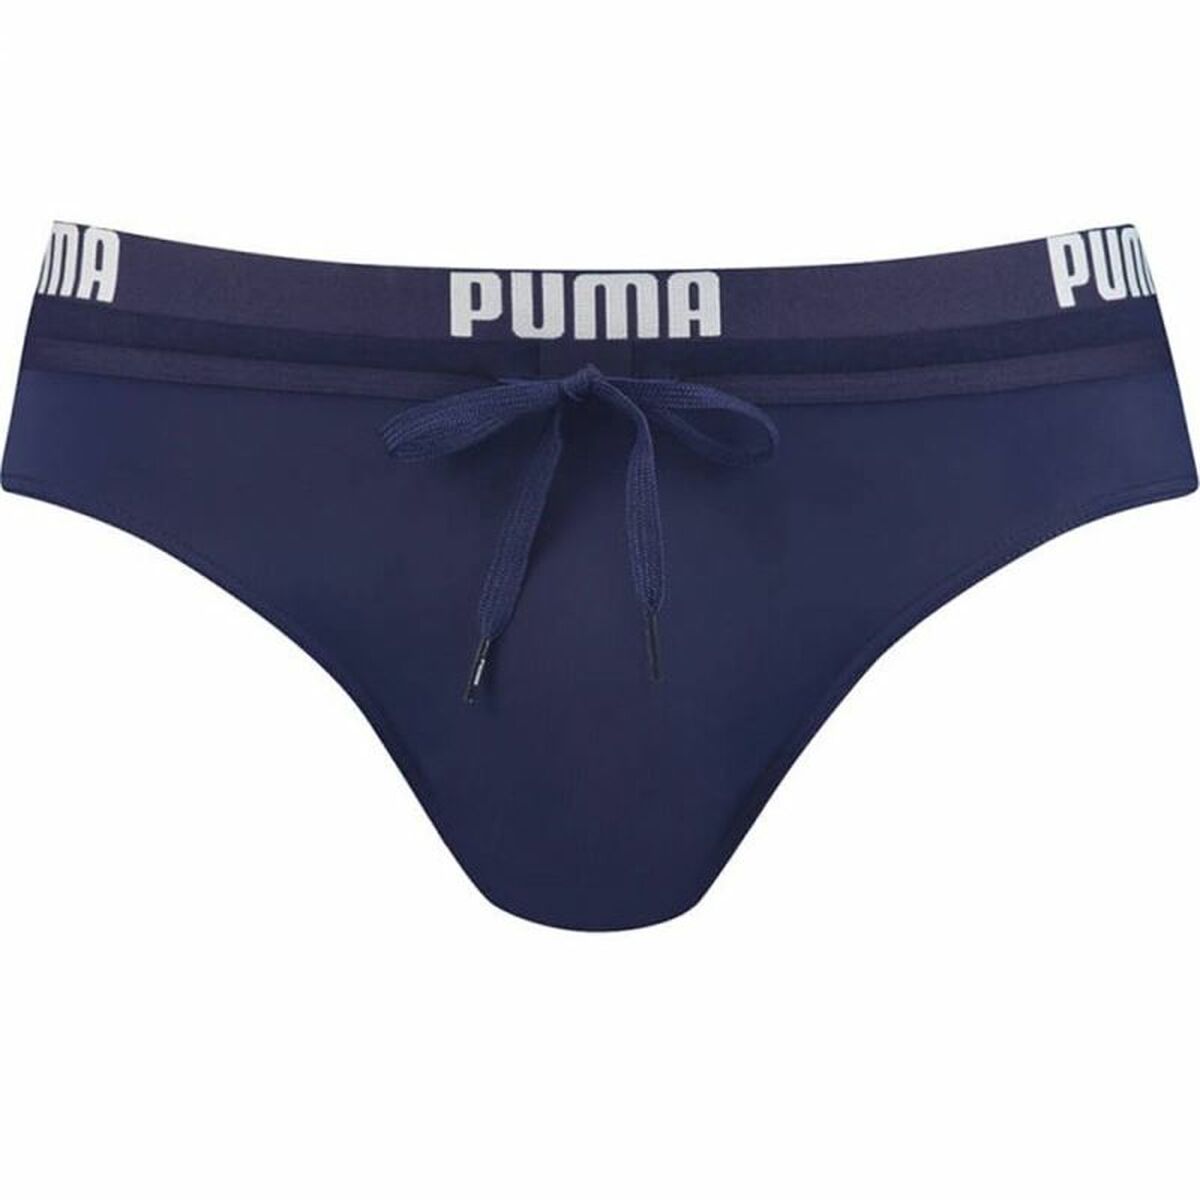 Costume da Bagno Uomo Puma Swim Slip Blu scuro